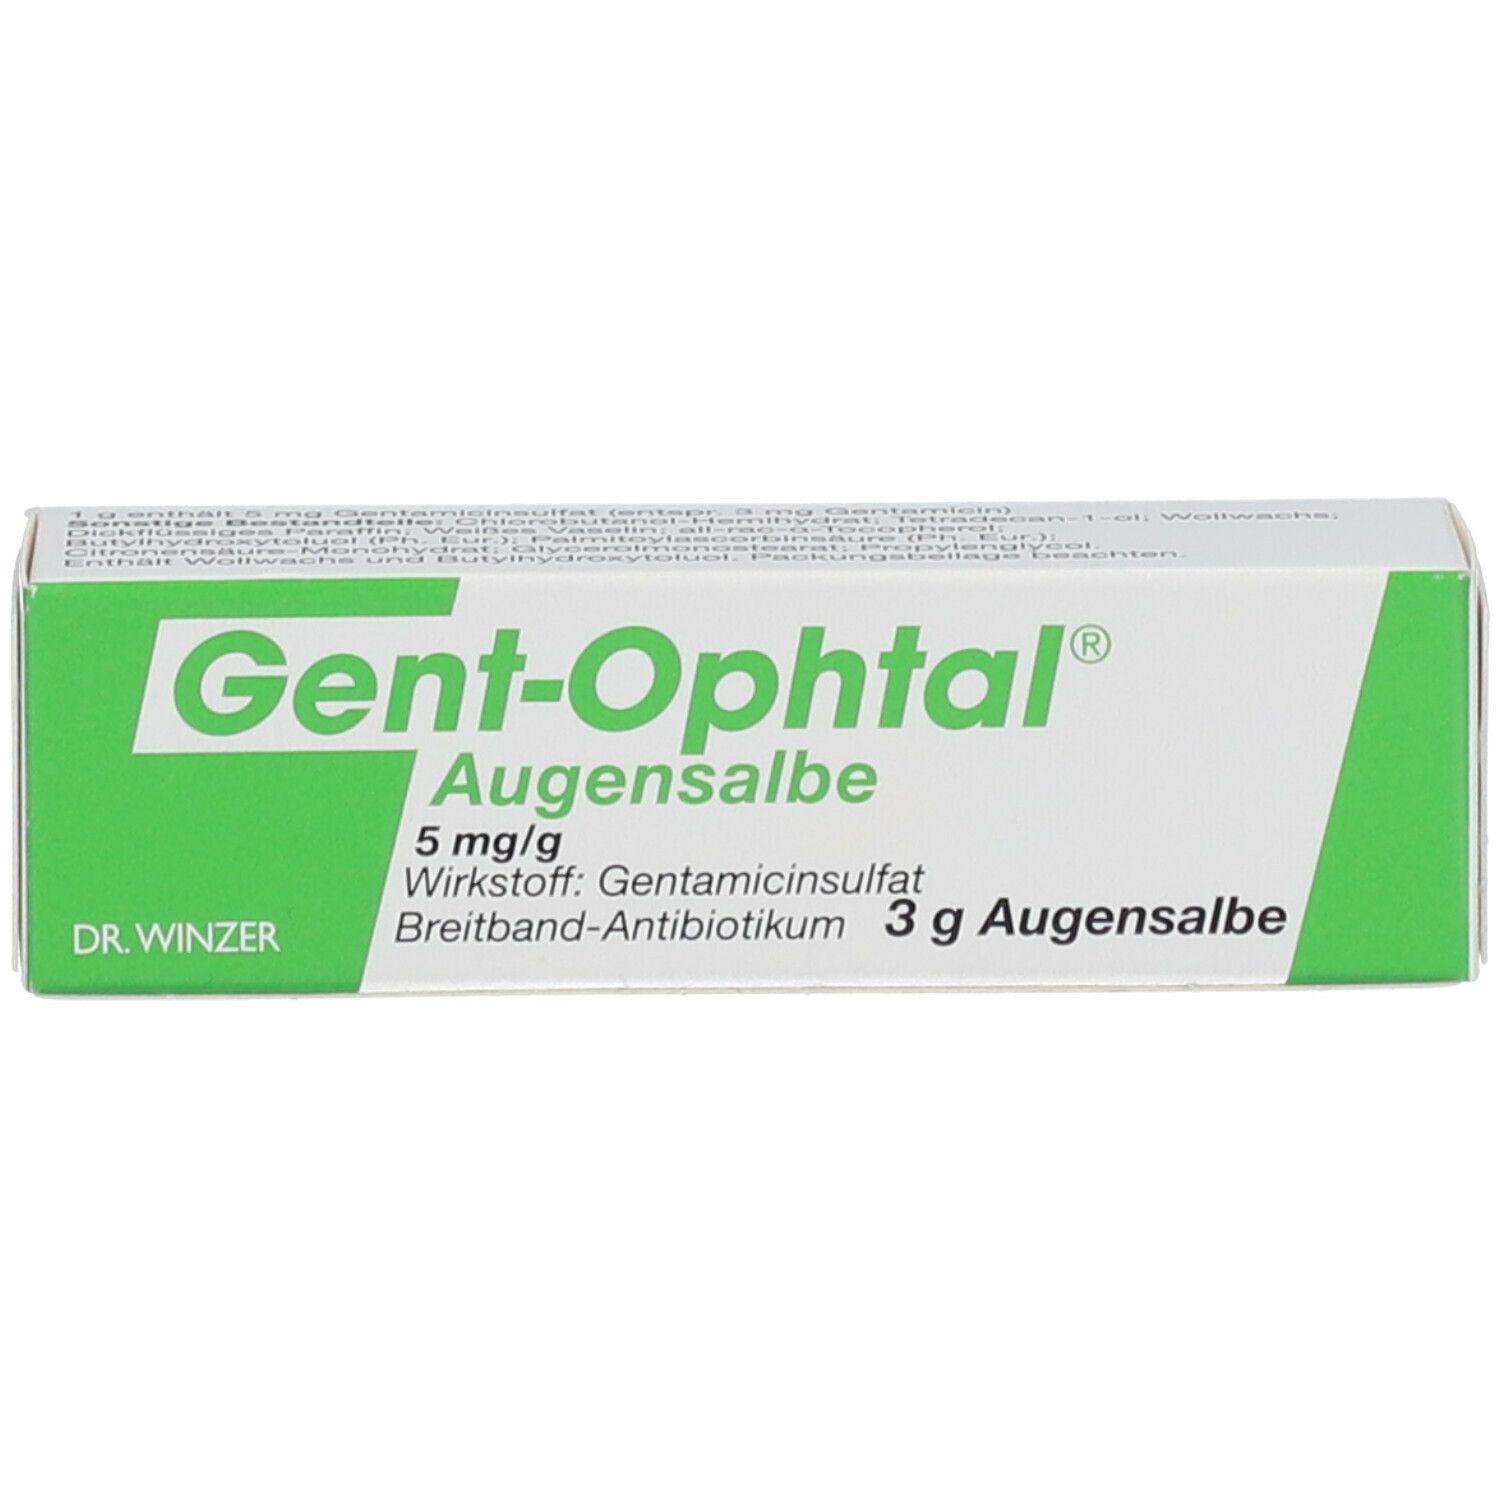 Gent-Ophtal®